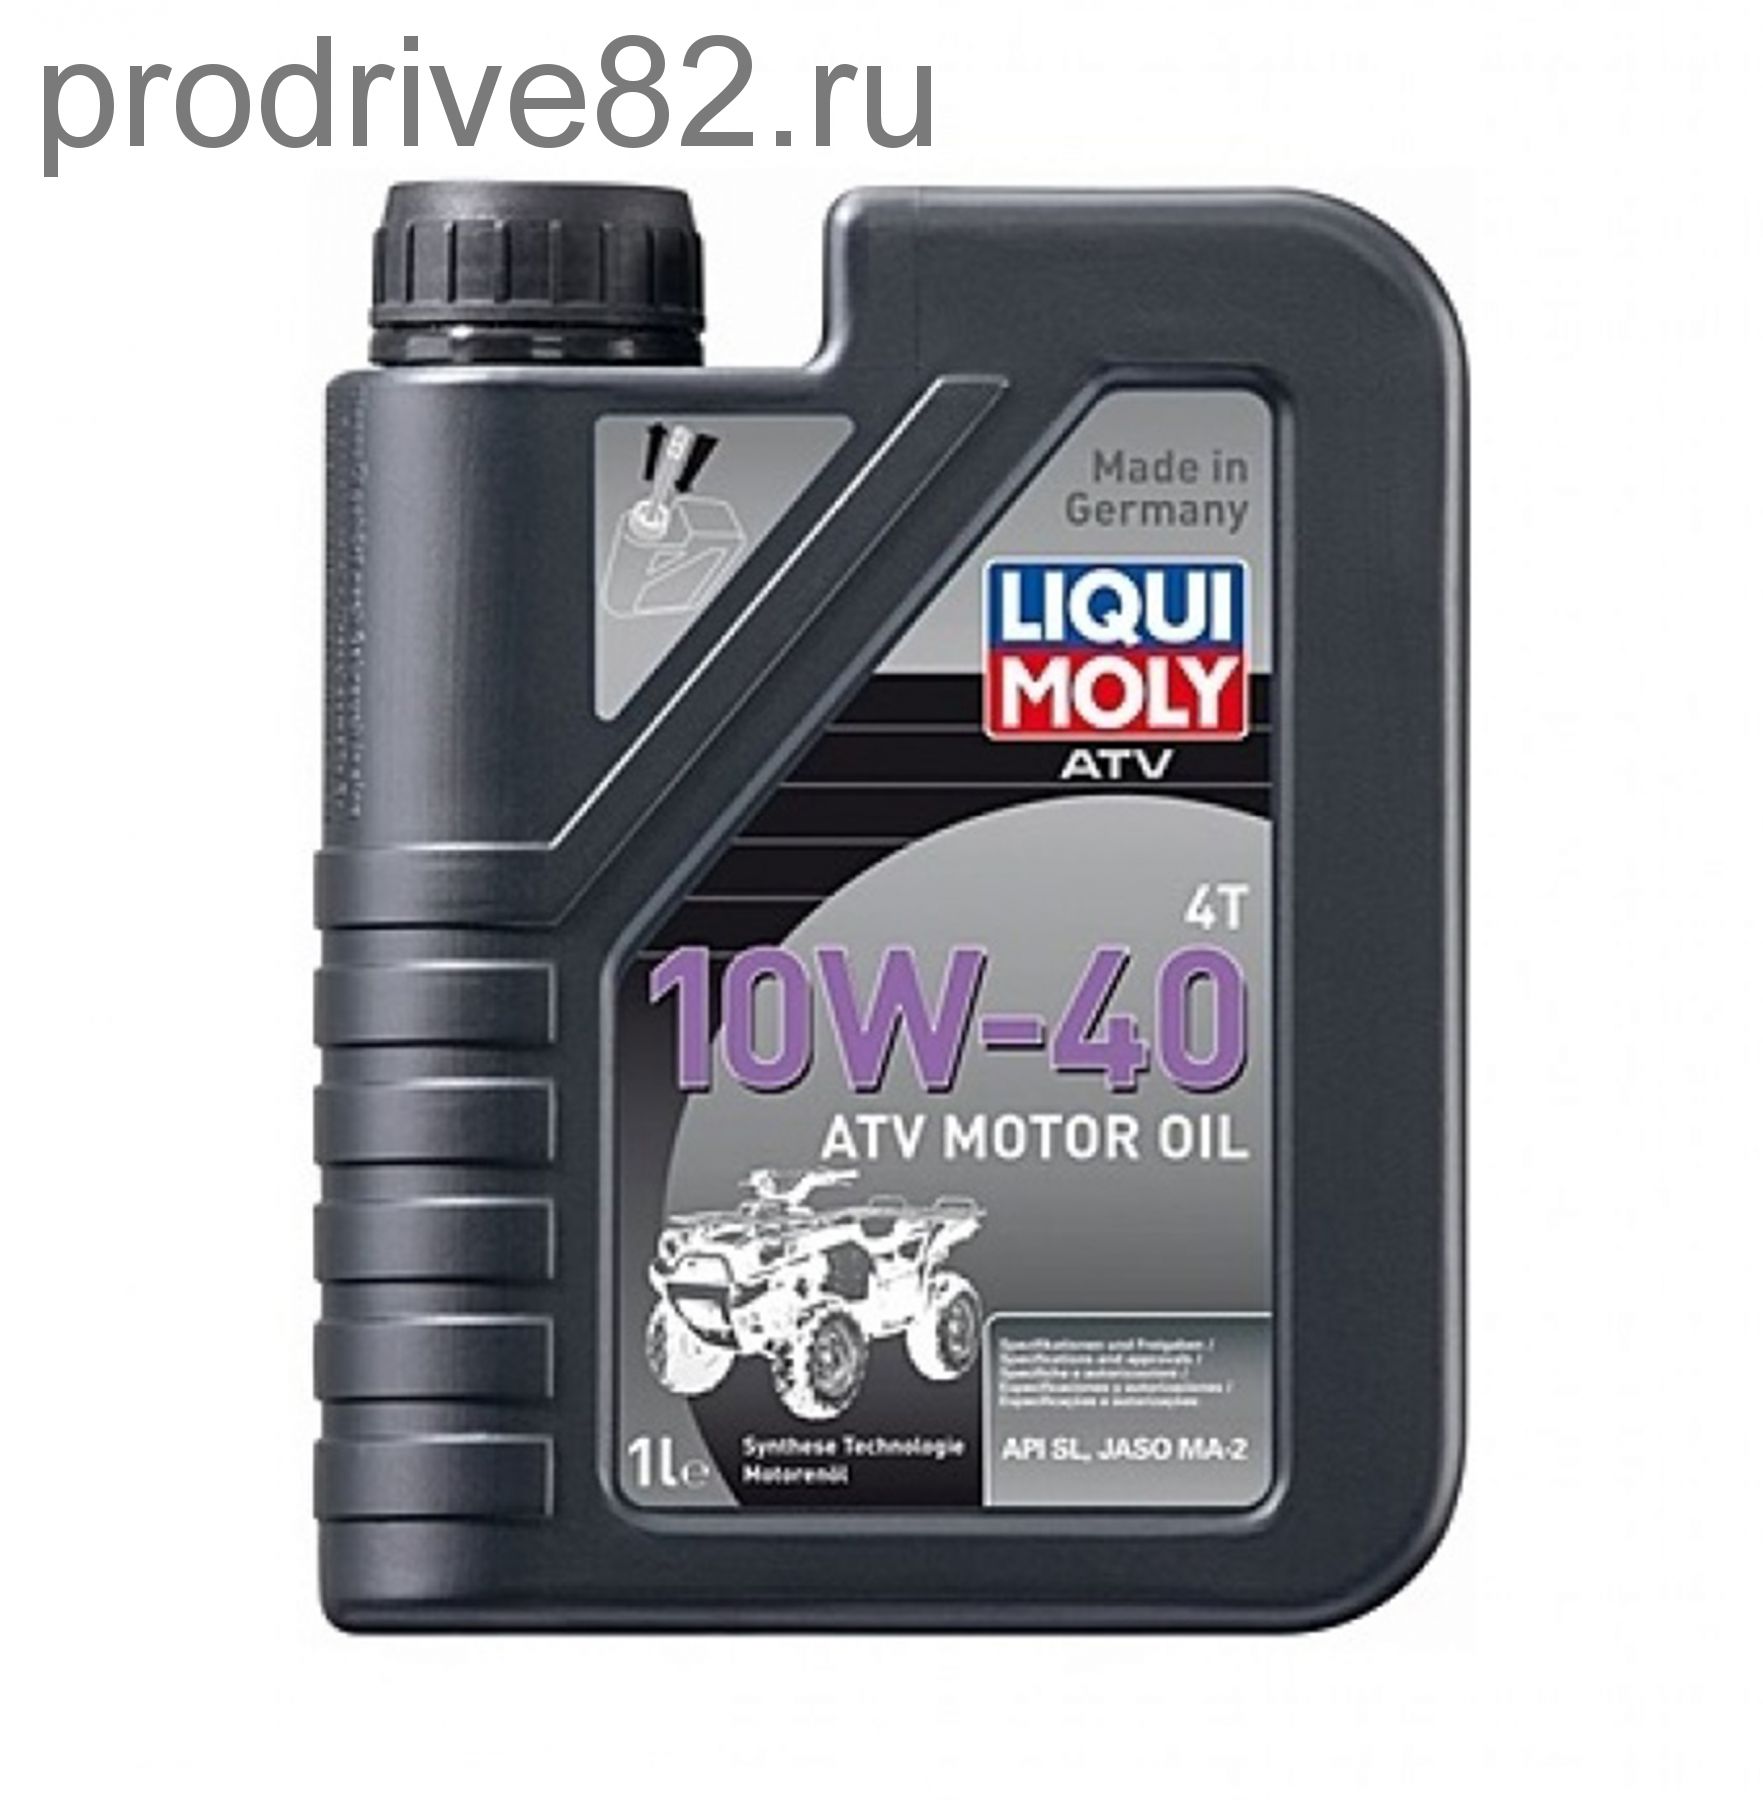 Масло Liqul Moly 10W-40 ATV Motor Oil